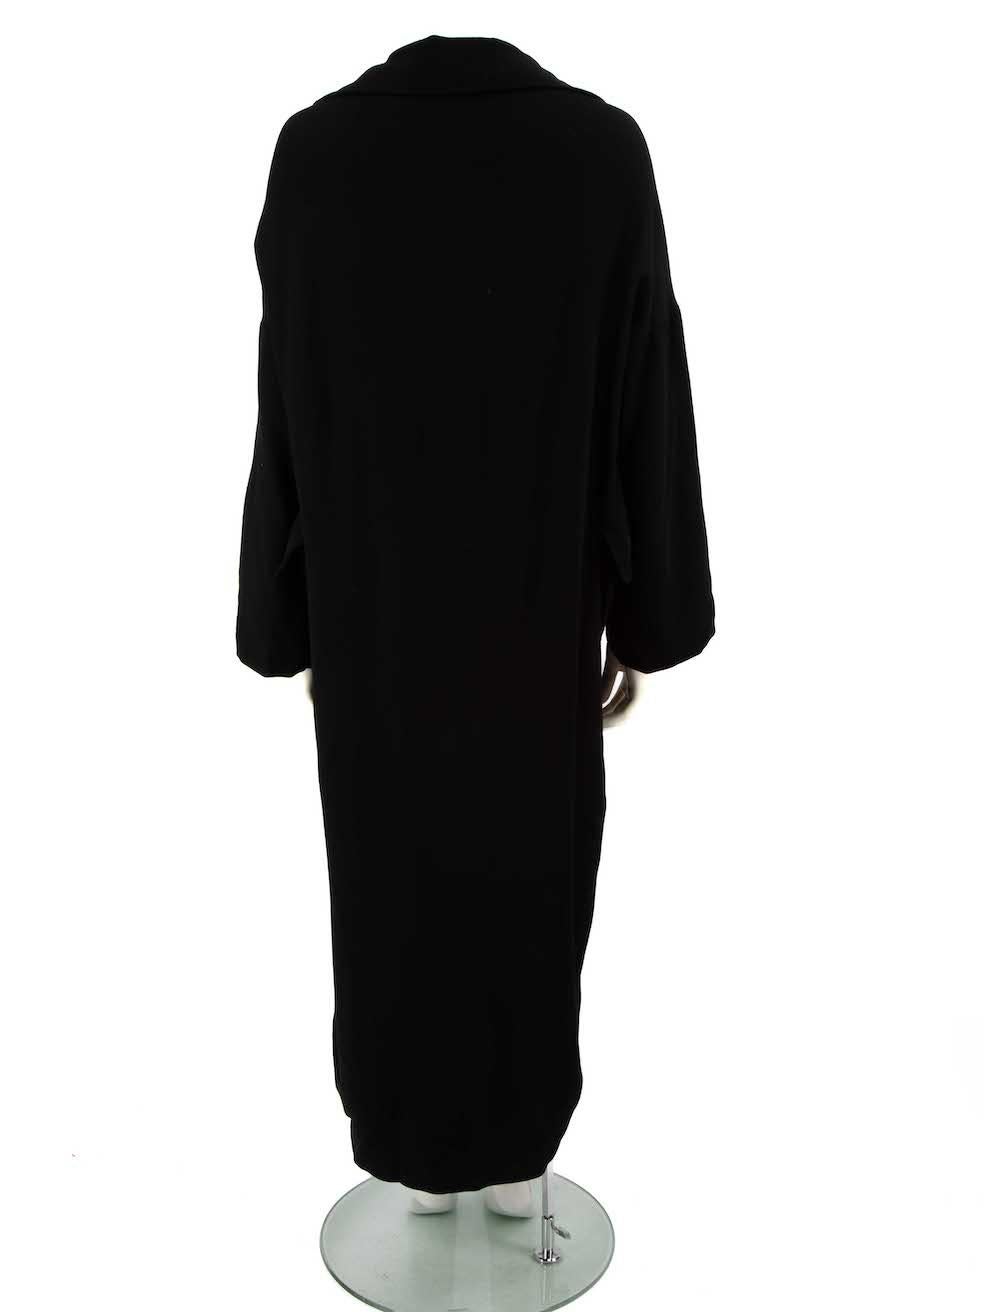 Yohji Yamamoto Black Wool Oversized Long Coat Size L In Good Condition For Sale In London, GB